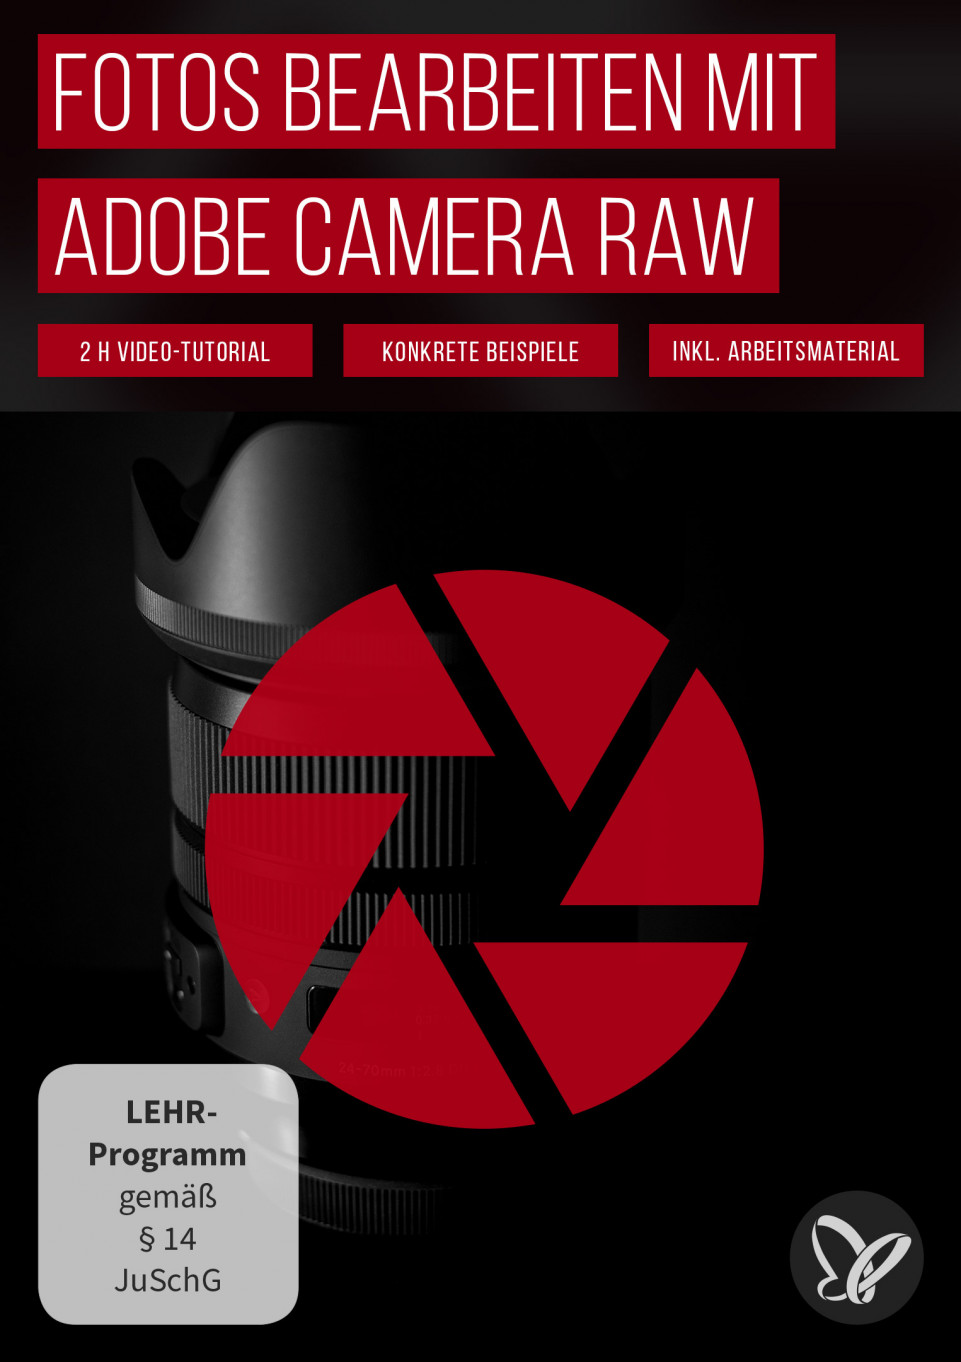 Adobe Camera Raw: Video-Tutorial zur Fotobearbeitung